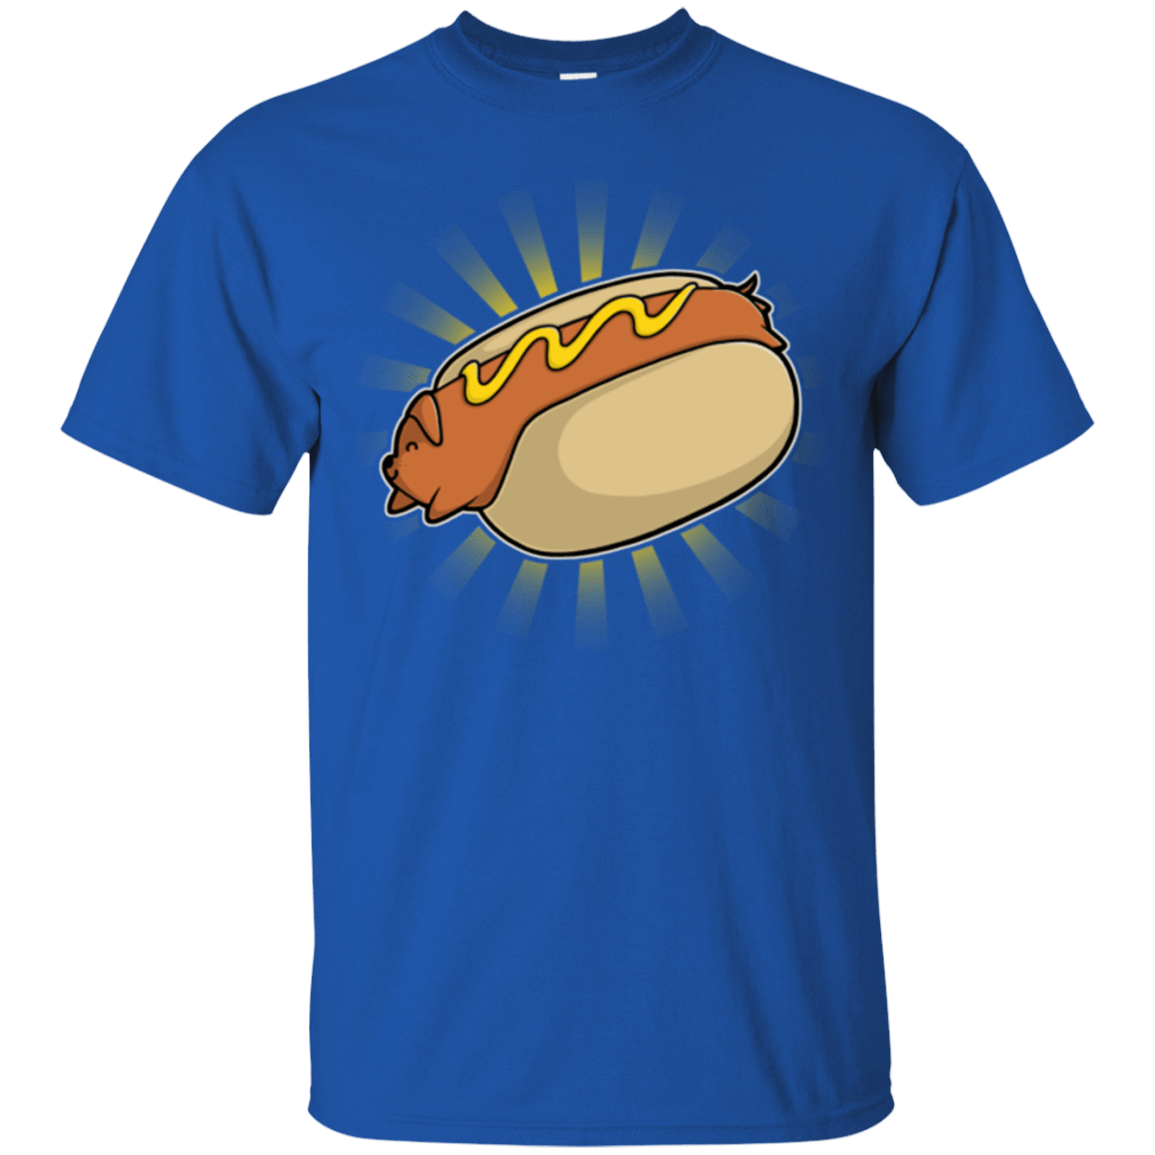 T-Shirts Royal / Small Hotdog T-Shirt